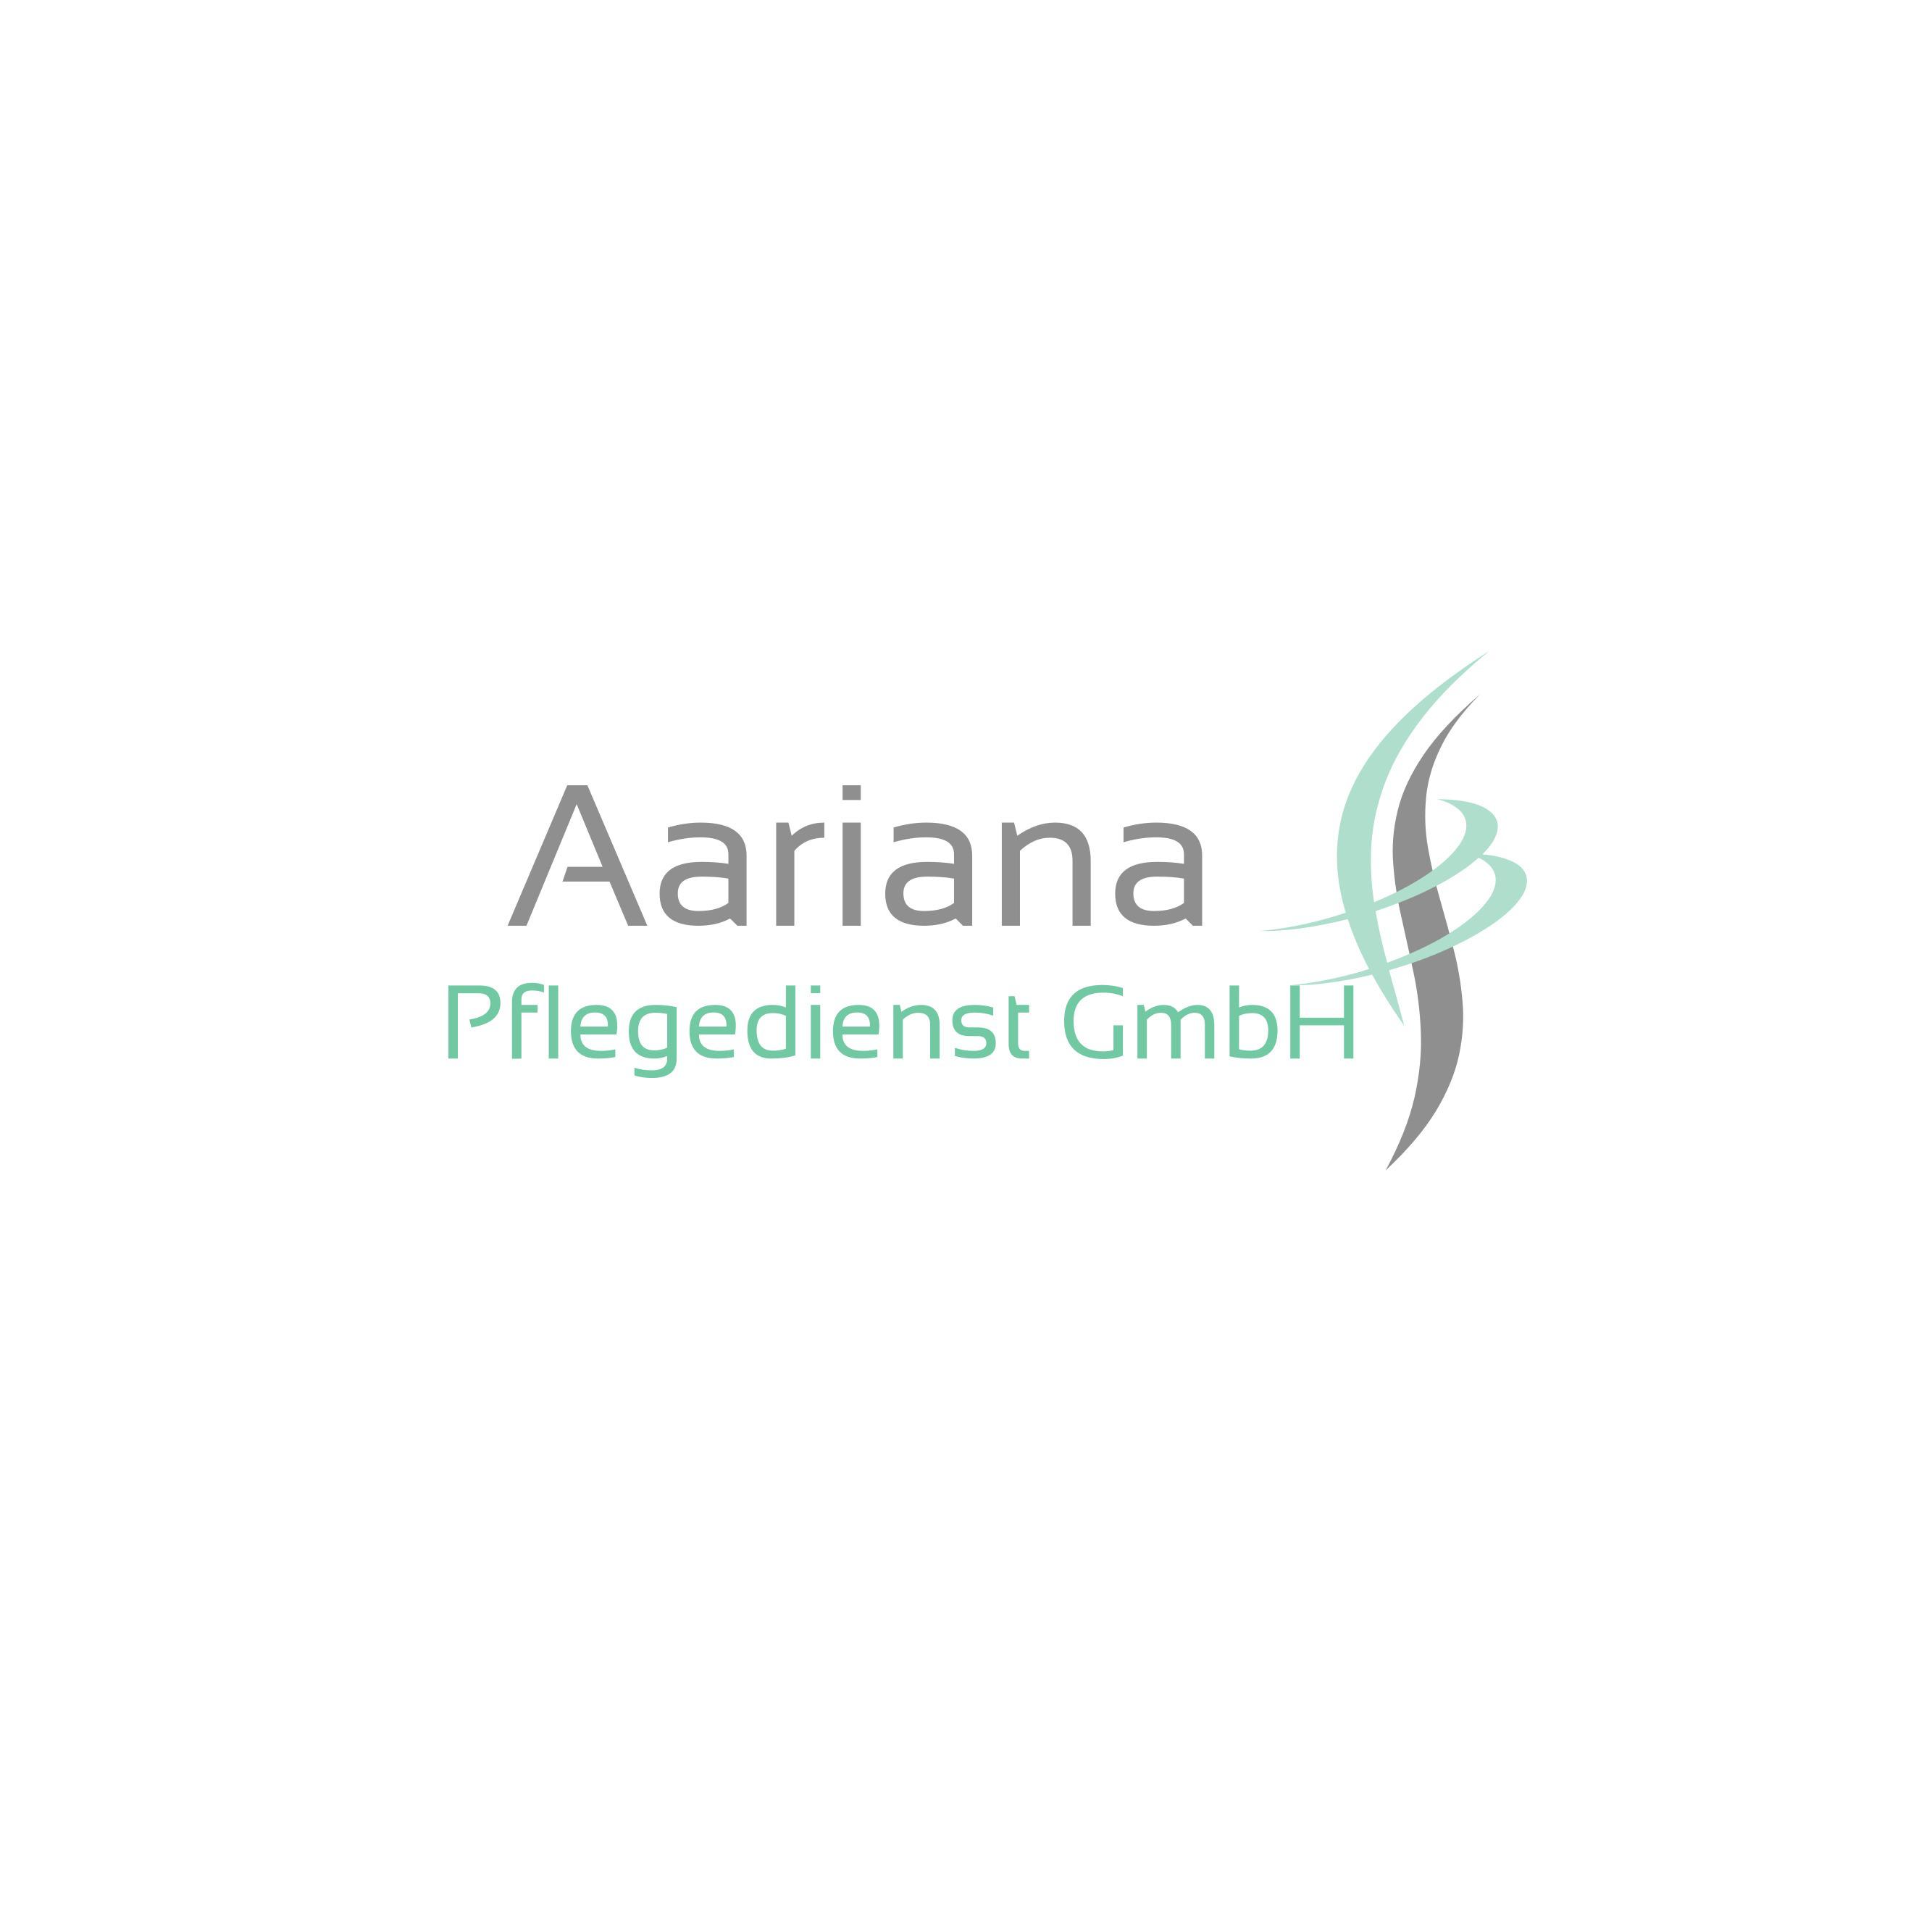 Aariana Pflegedienst GmbH Logo